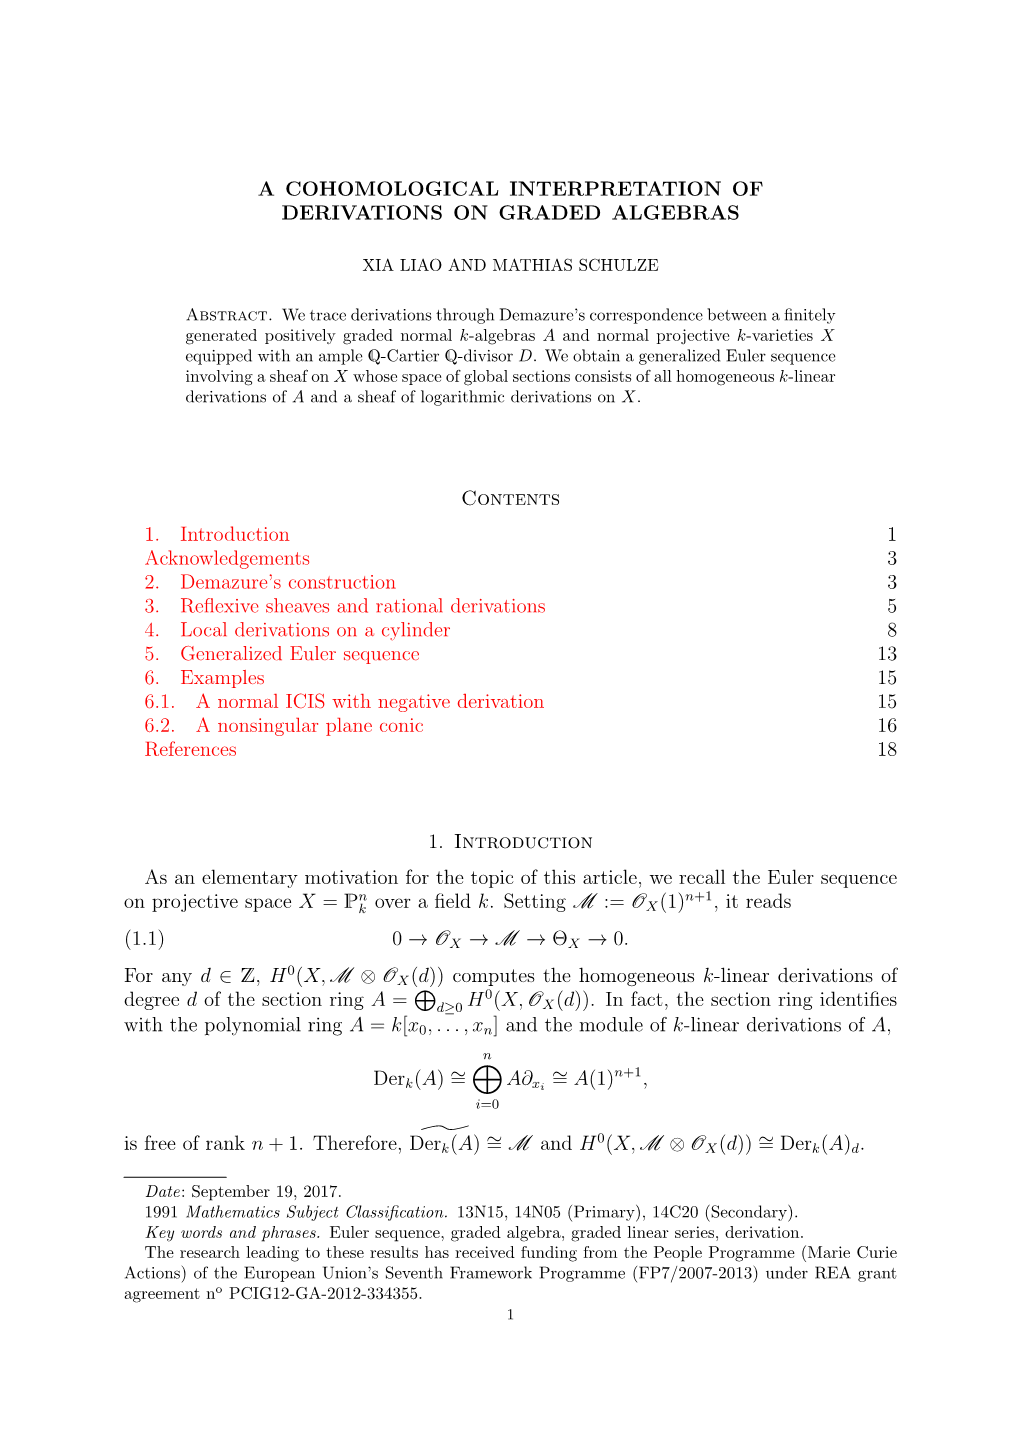 A Cohomological Interpretation of Derivations on Graded Algebras